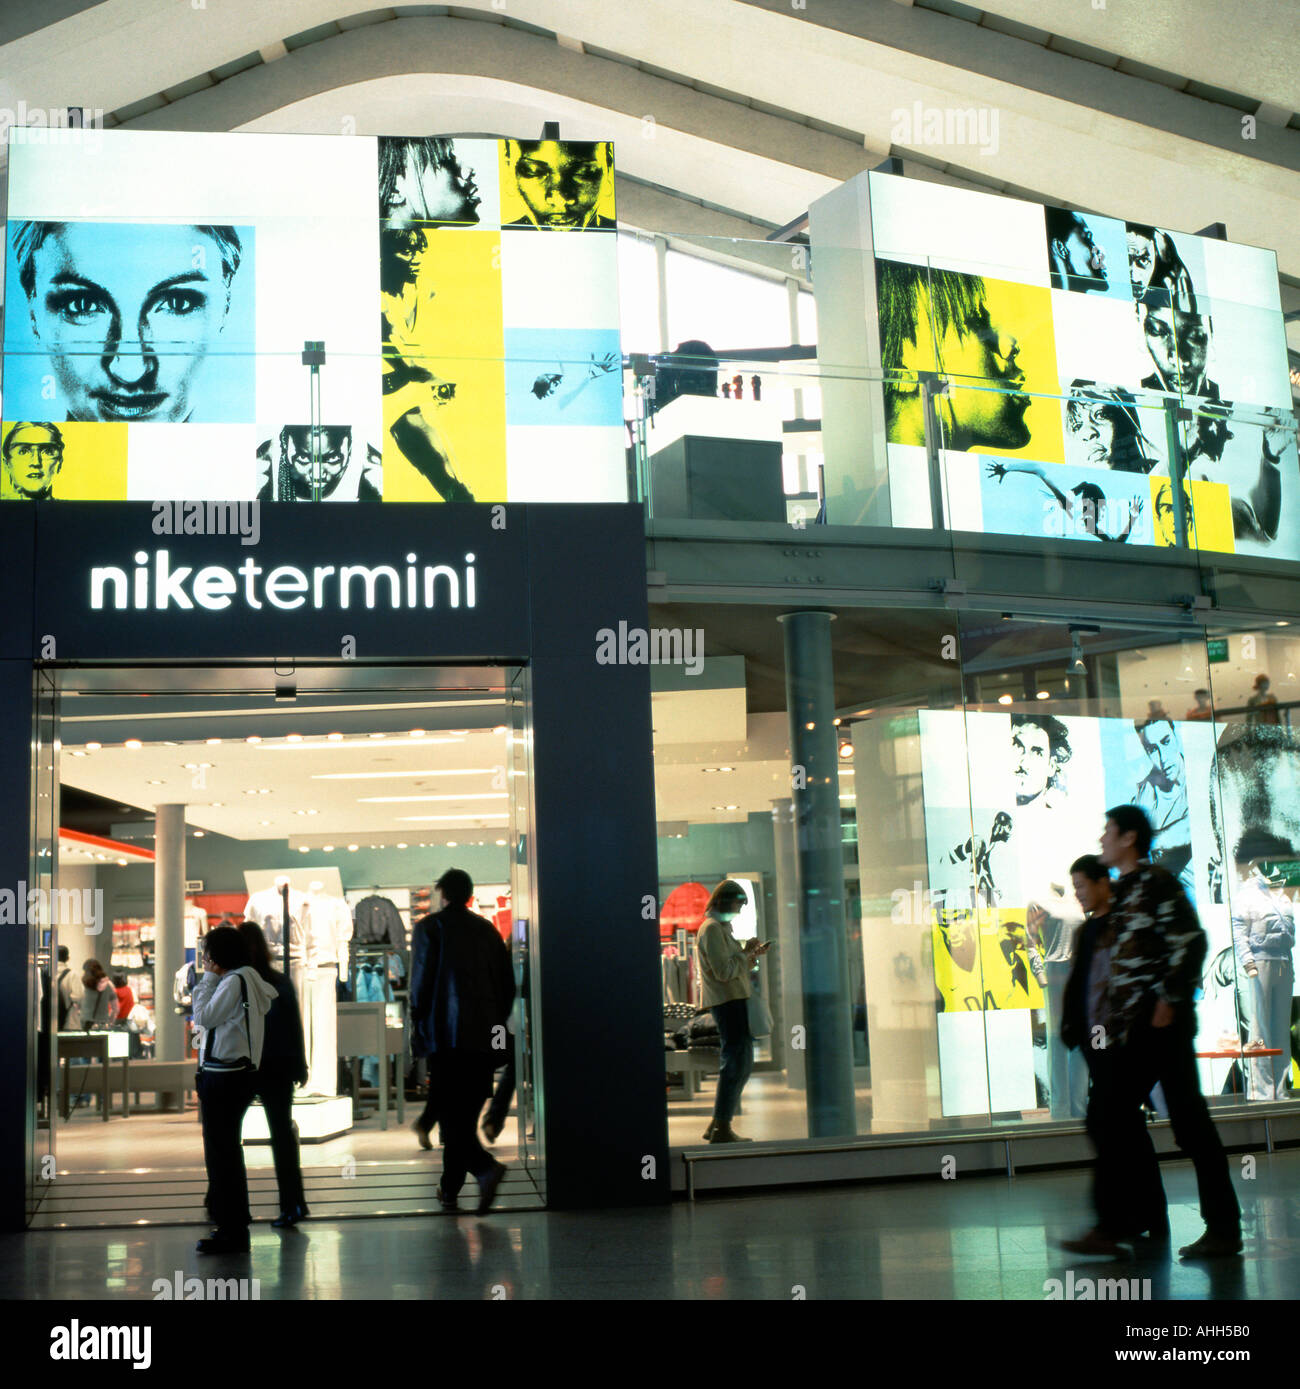 Nike Termini Train Station Rome Italy Stock Photo - Alamy